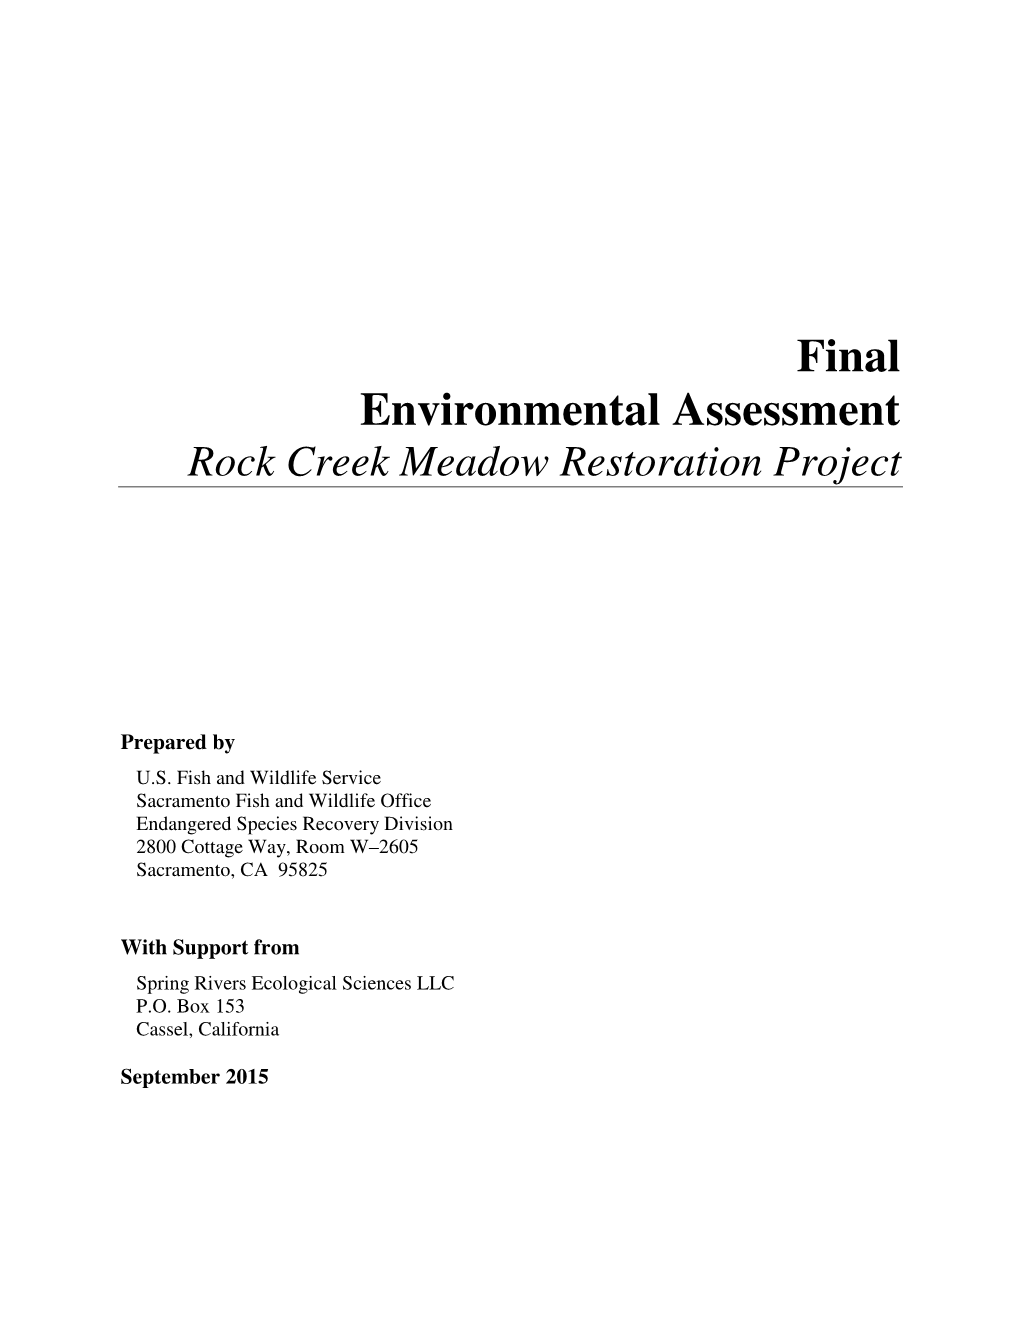 Final Environmental Assessment Rock Creek Meadow Restoration Project